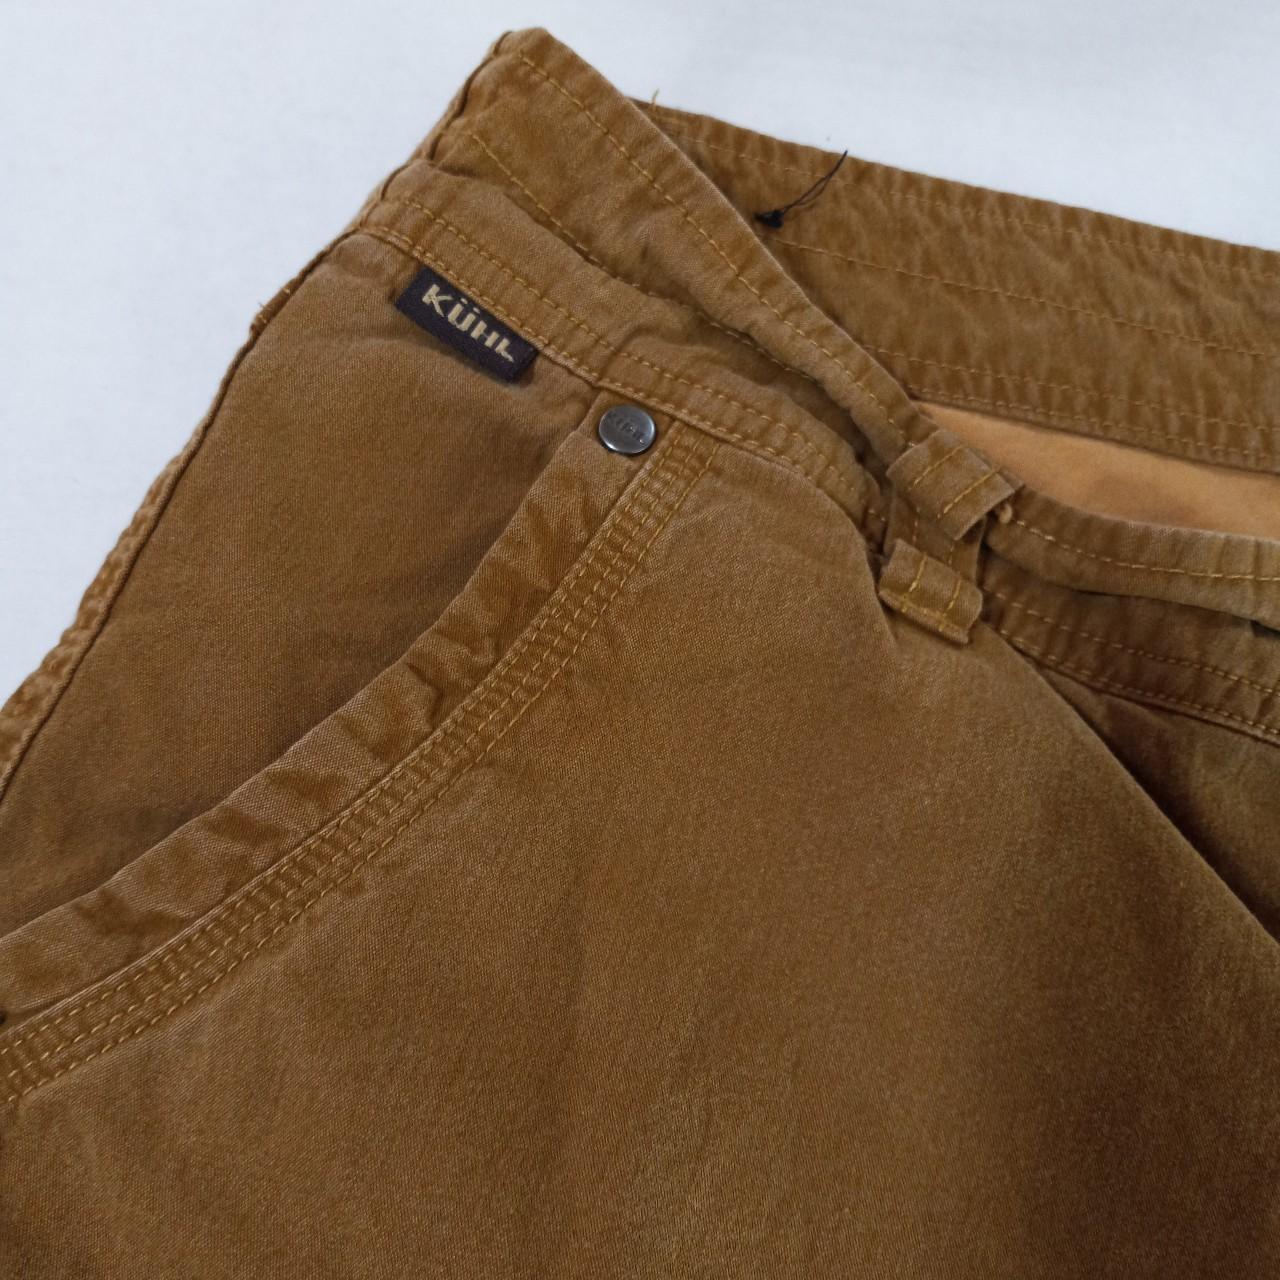 KULE Men's Brown and Khaki Shorts (7)